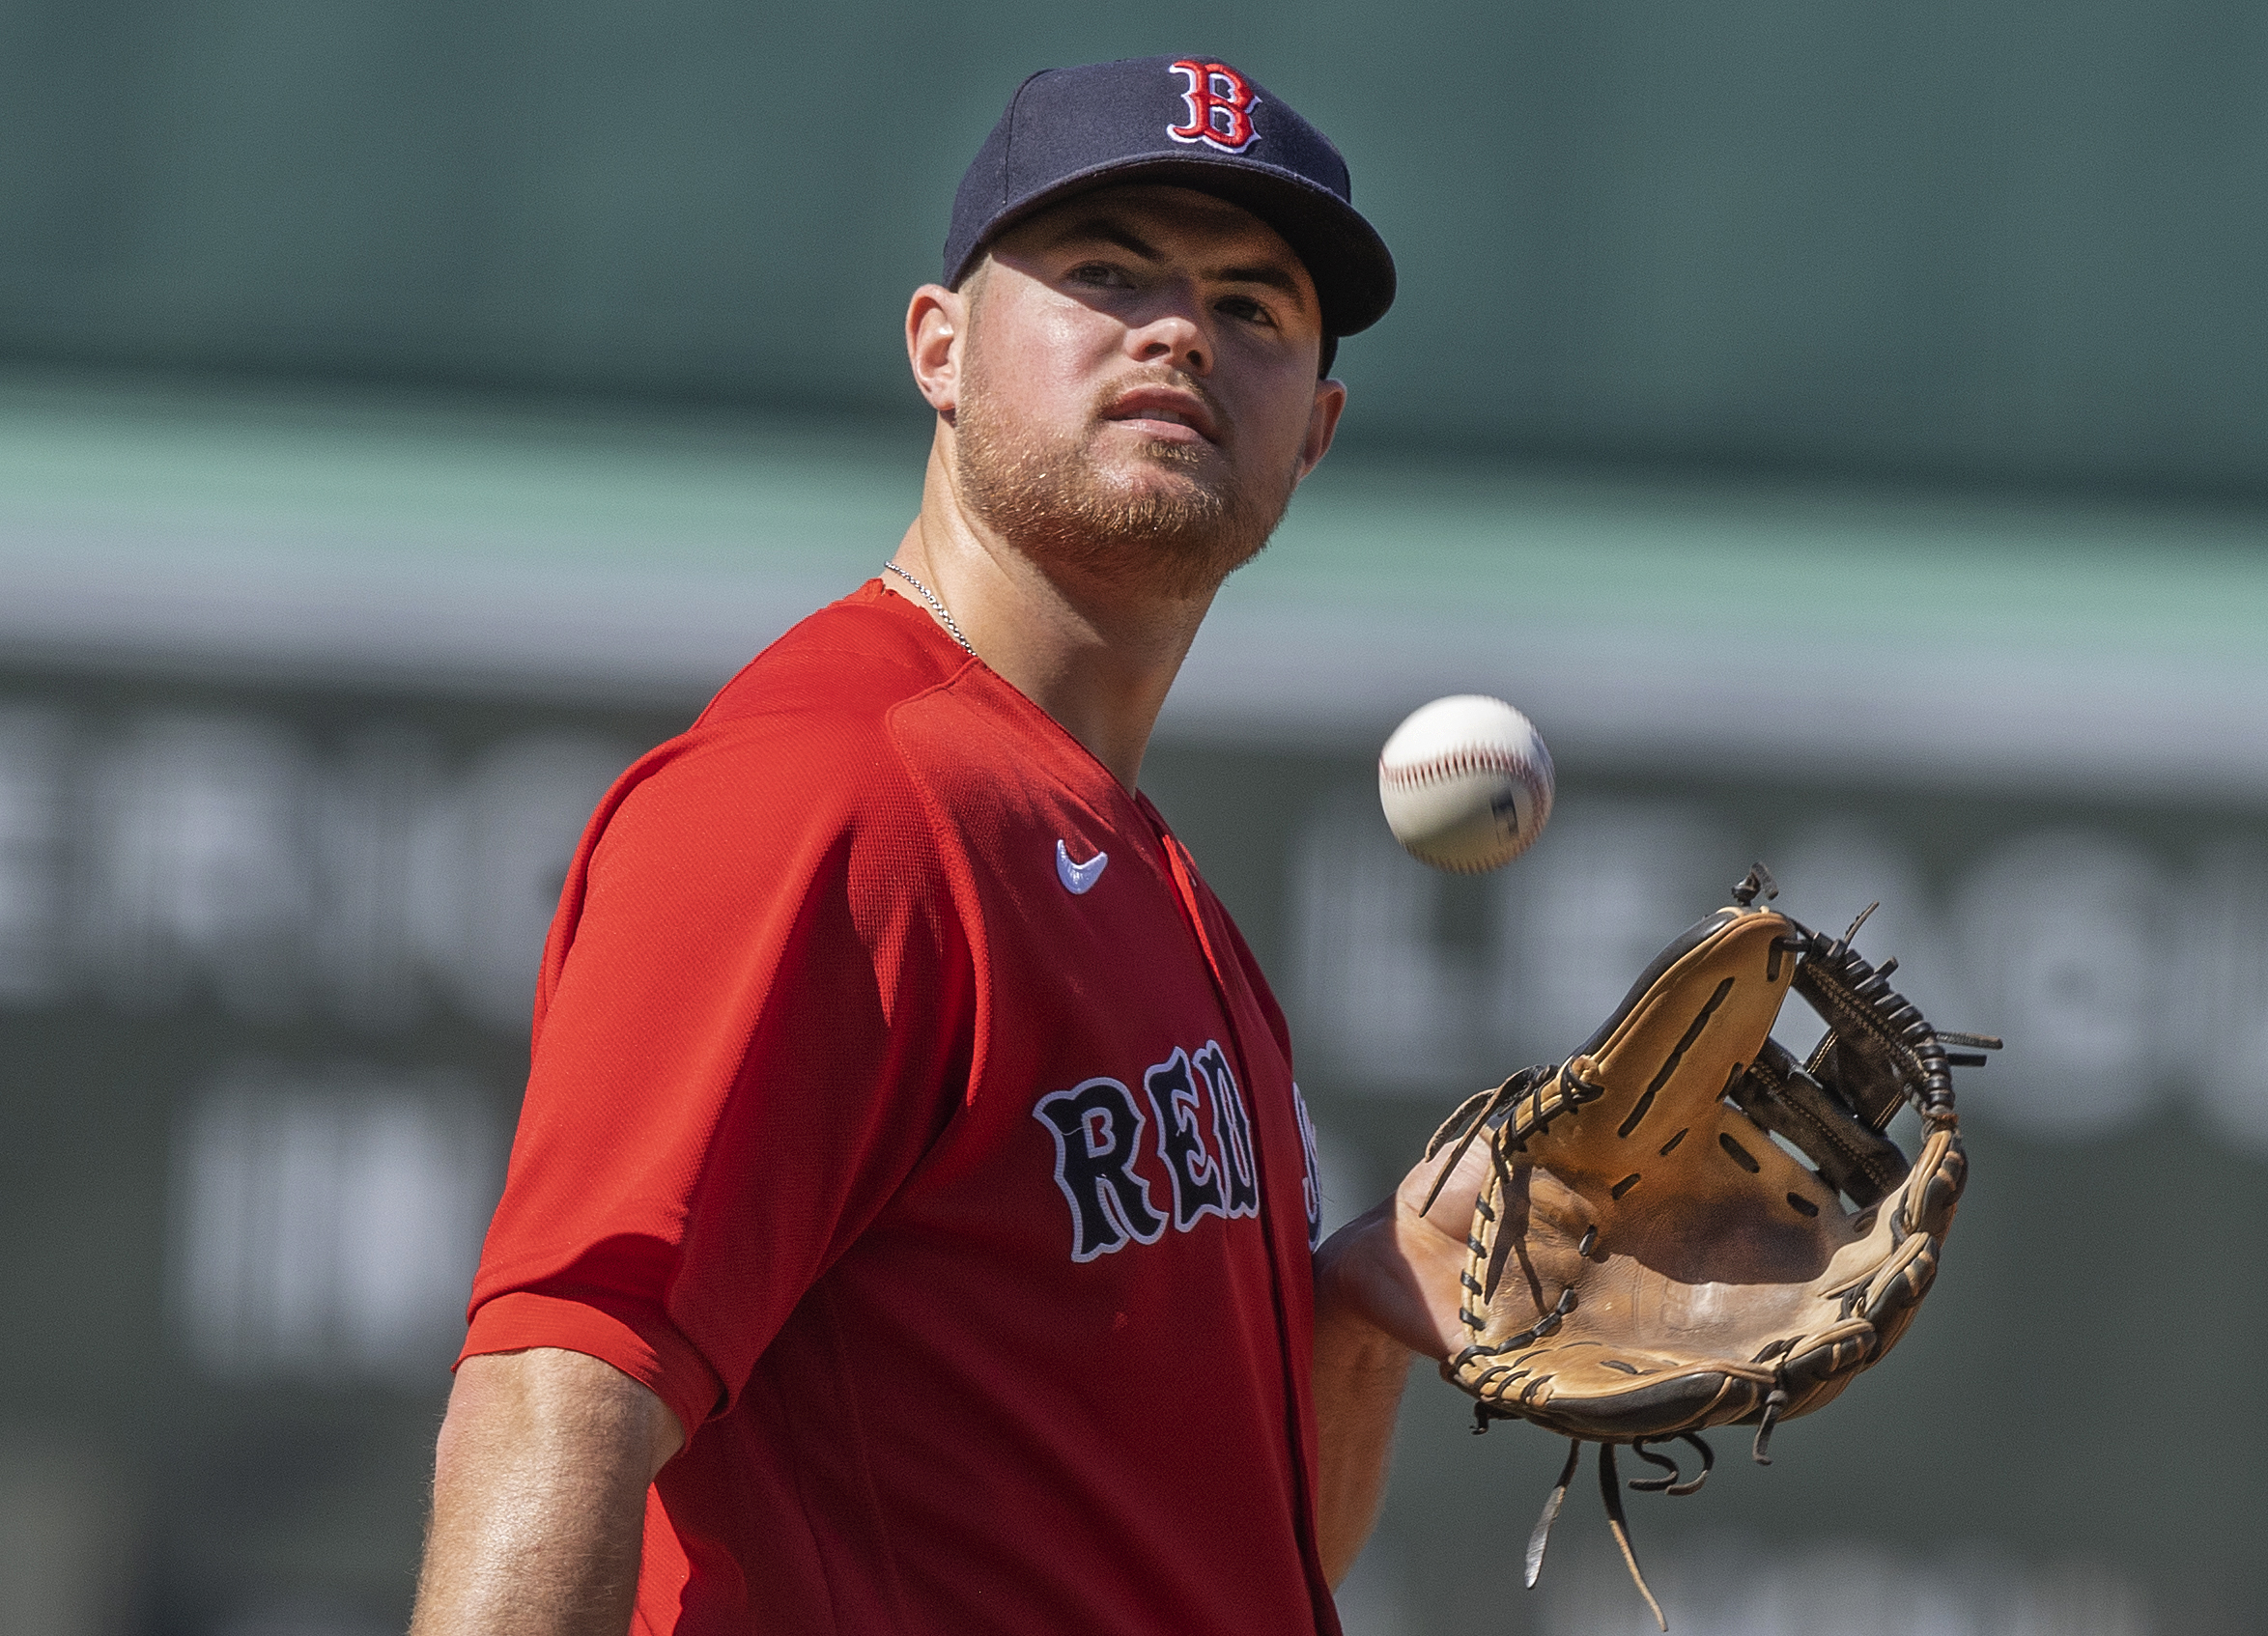 Boston Red Sox 2021 Season Review: Adam Ottavino was steady, if